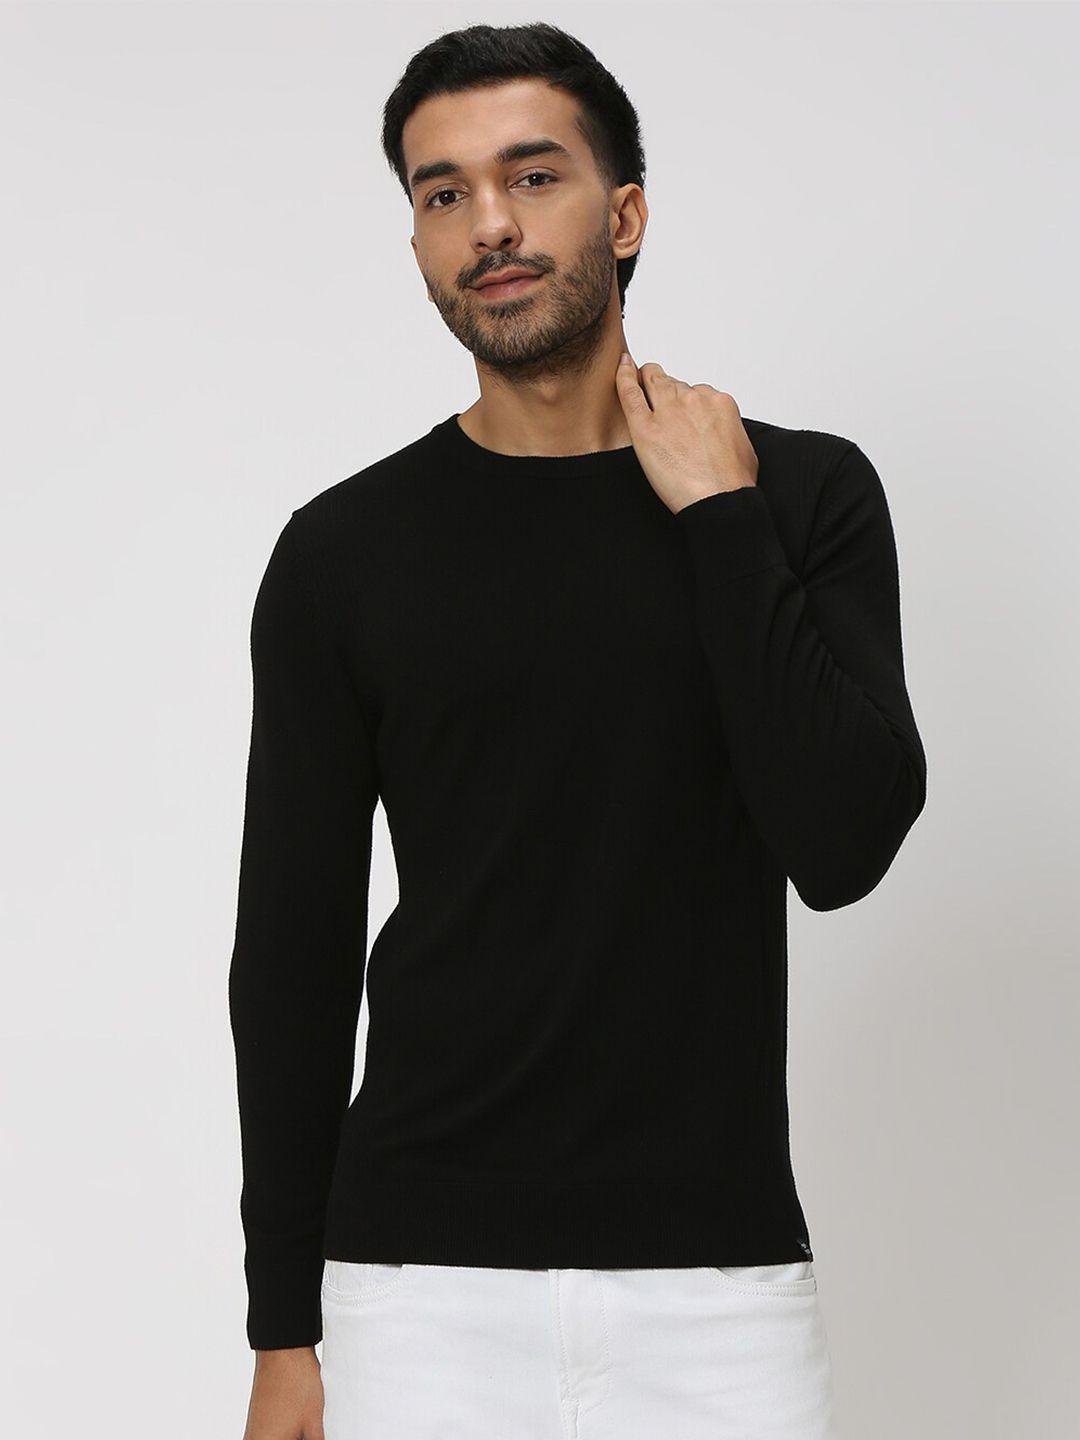 mufti-slim-fit-self-designed-long-sleeves-flat-knit-t-shirt